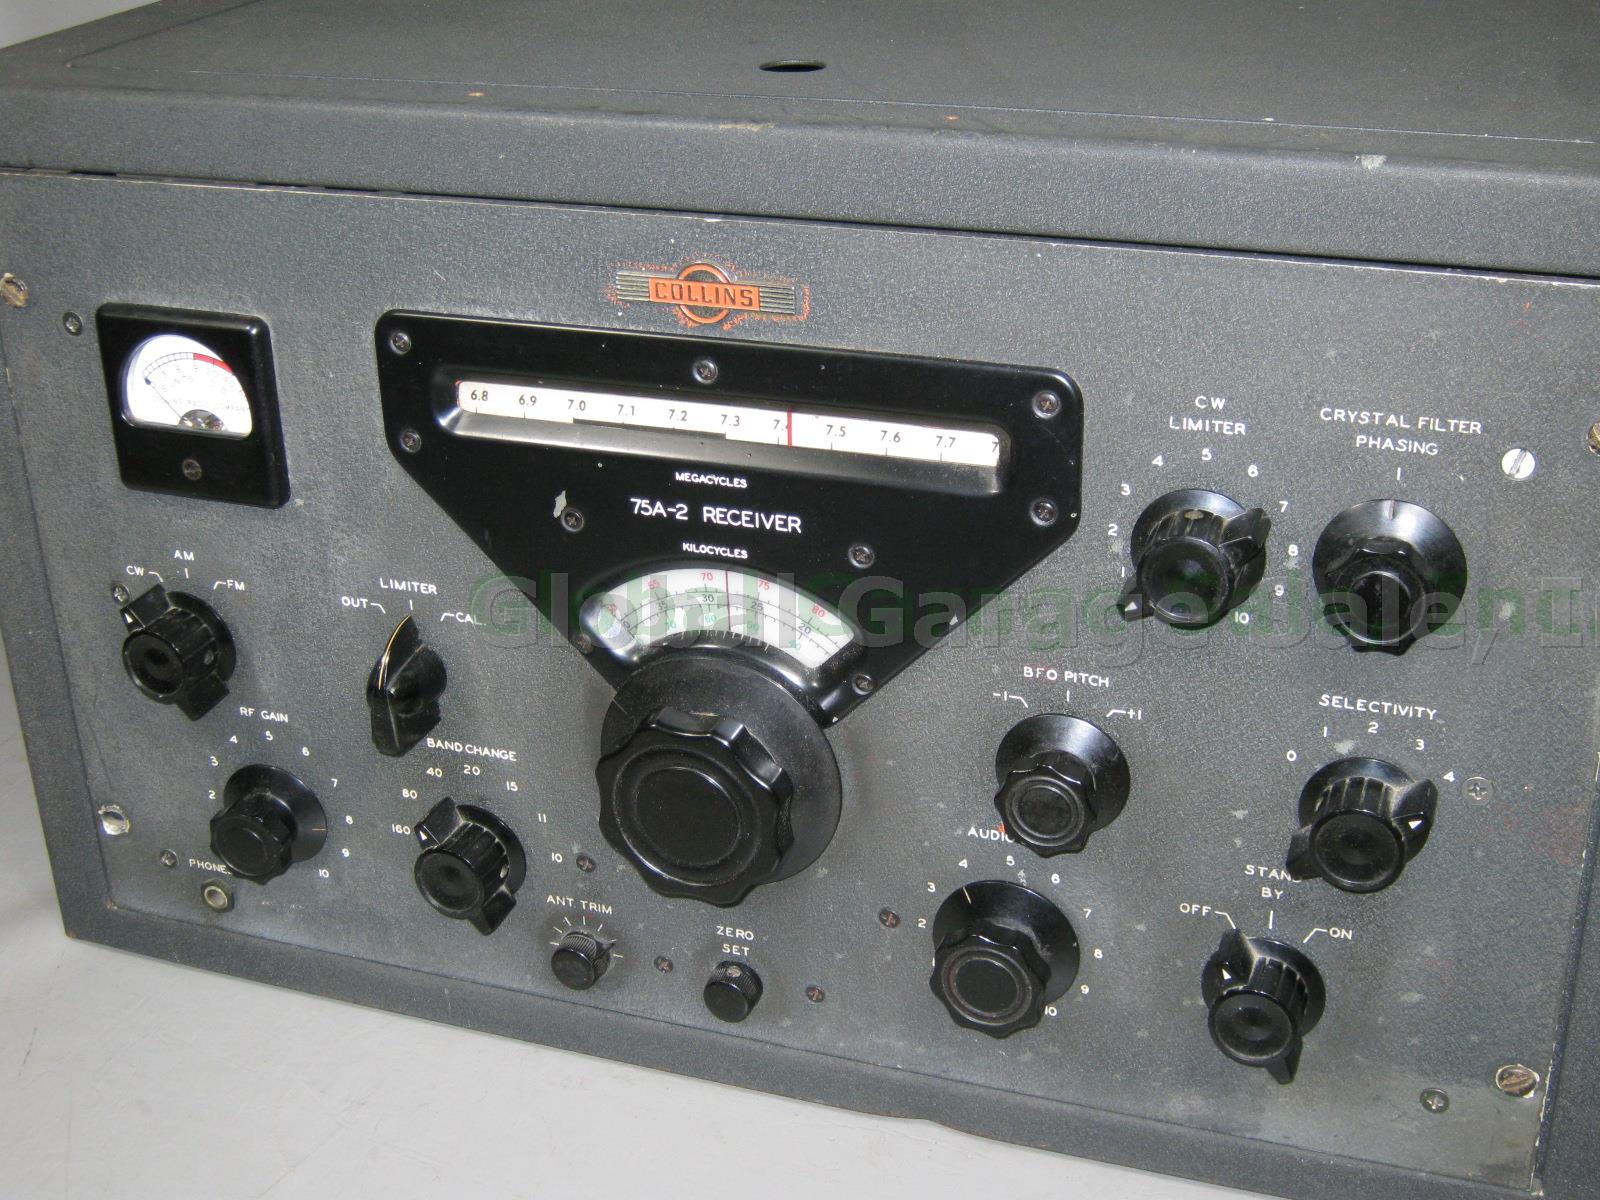 Vtg Collins 75A-2 Ham Amateur Radio Receiver For Parts Or Restoration NO RESERVE 1